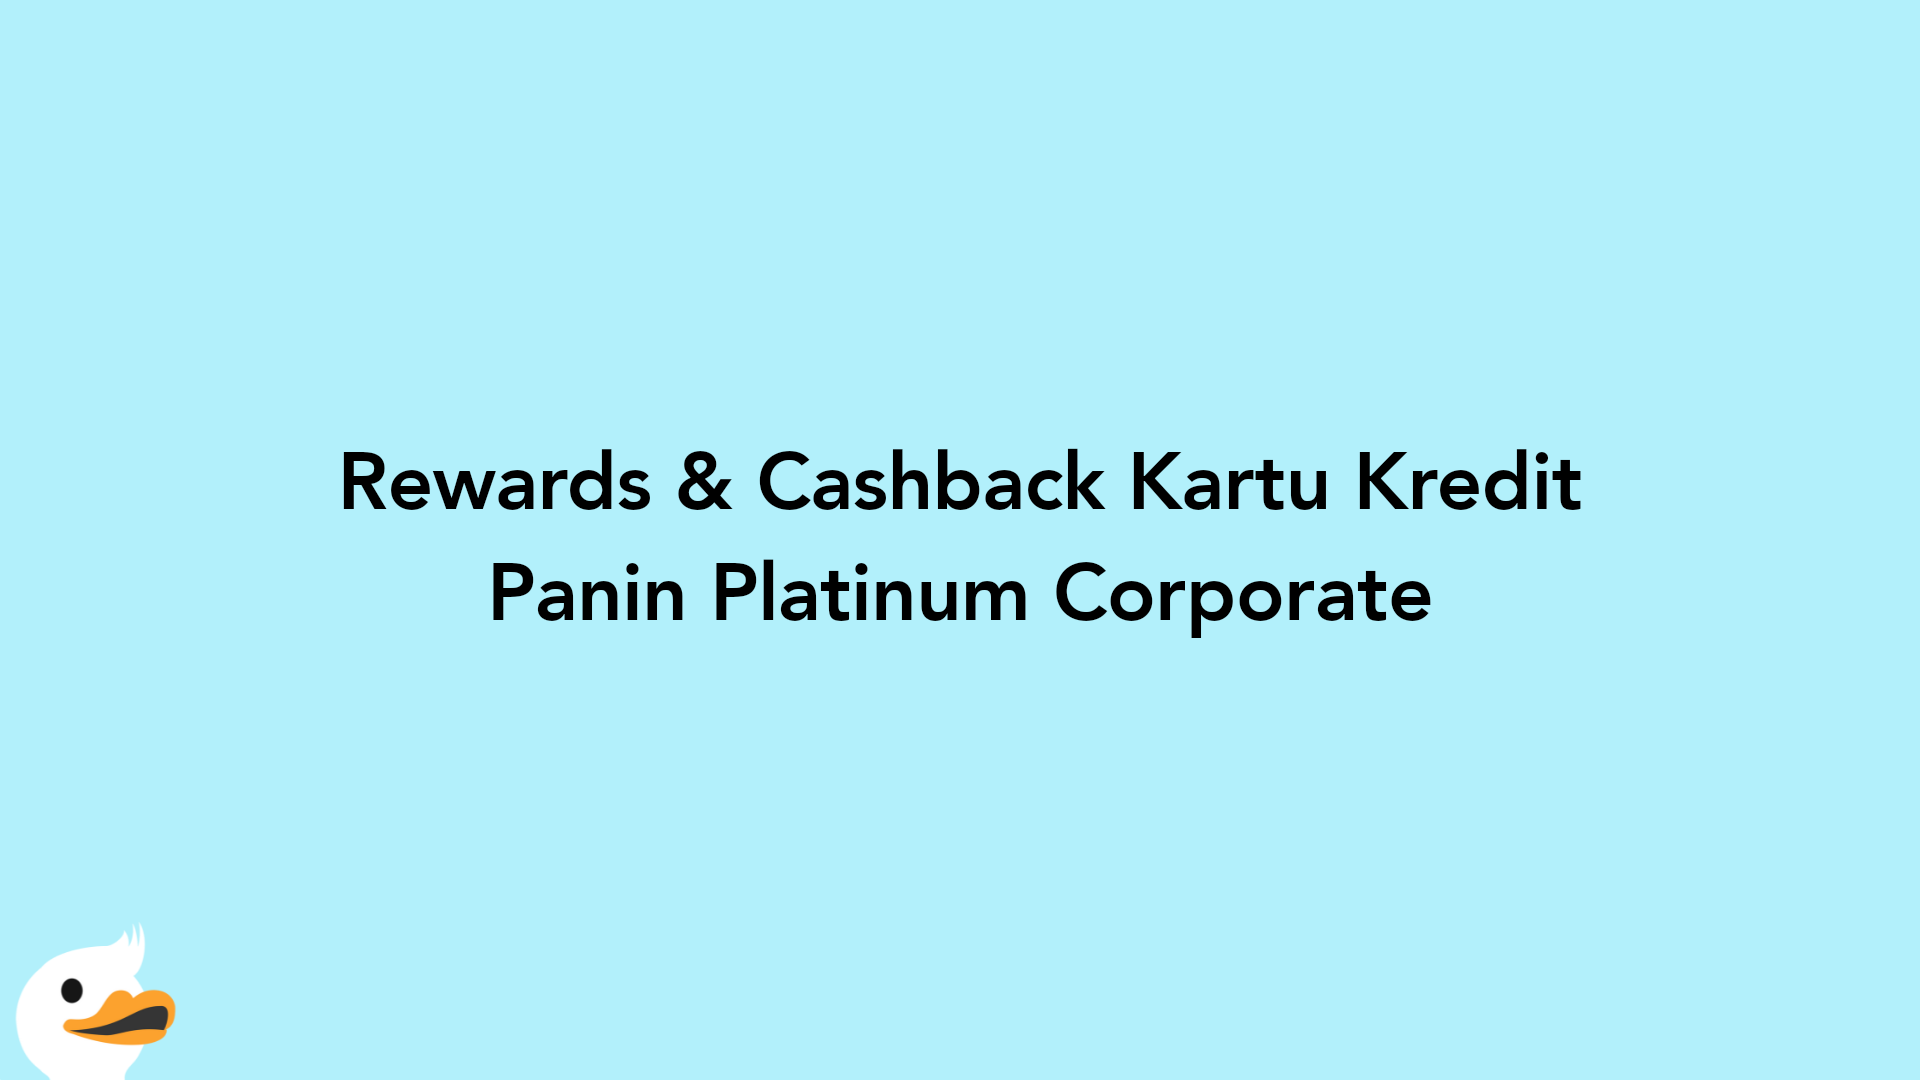 Rewards & Cashback Kartu Kredit Panin Platinum Corporate